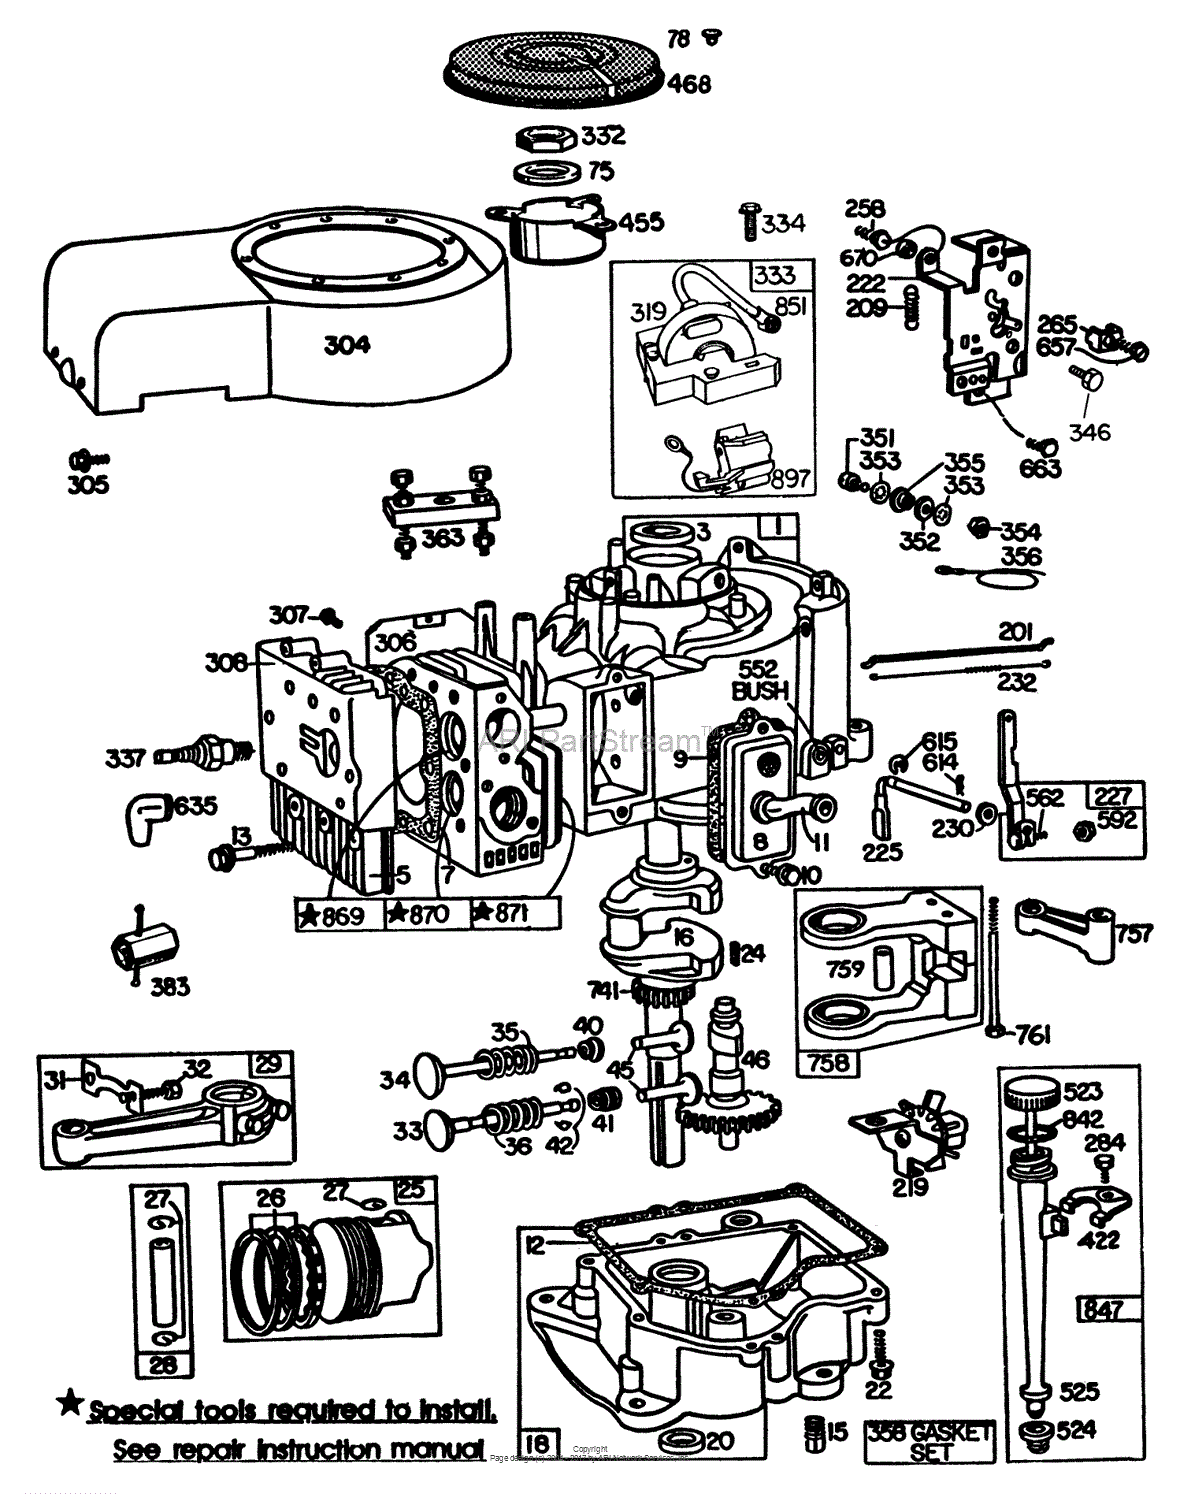 Toro 56155, 11-32 Rear Engine Rider, 1983 (SN 3000001-3999999) Parts ...